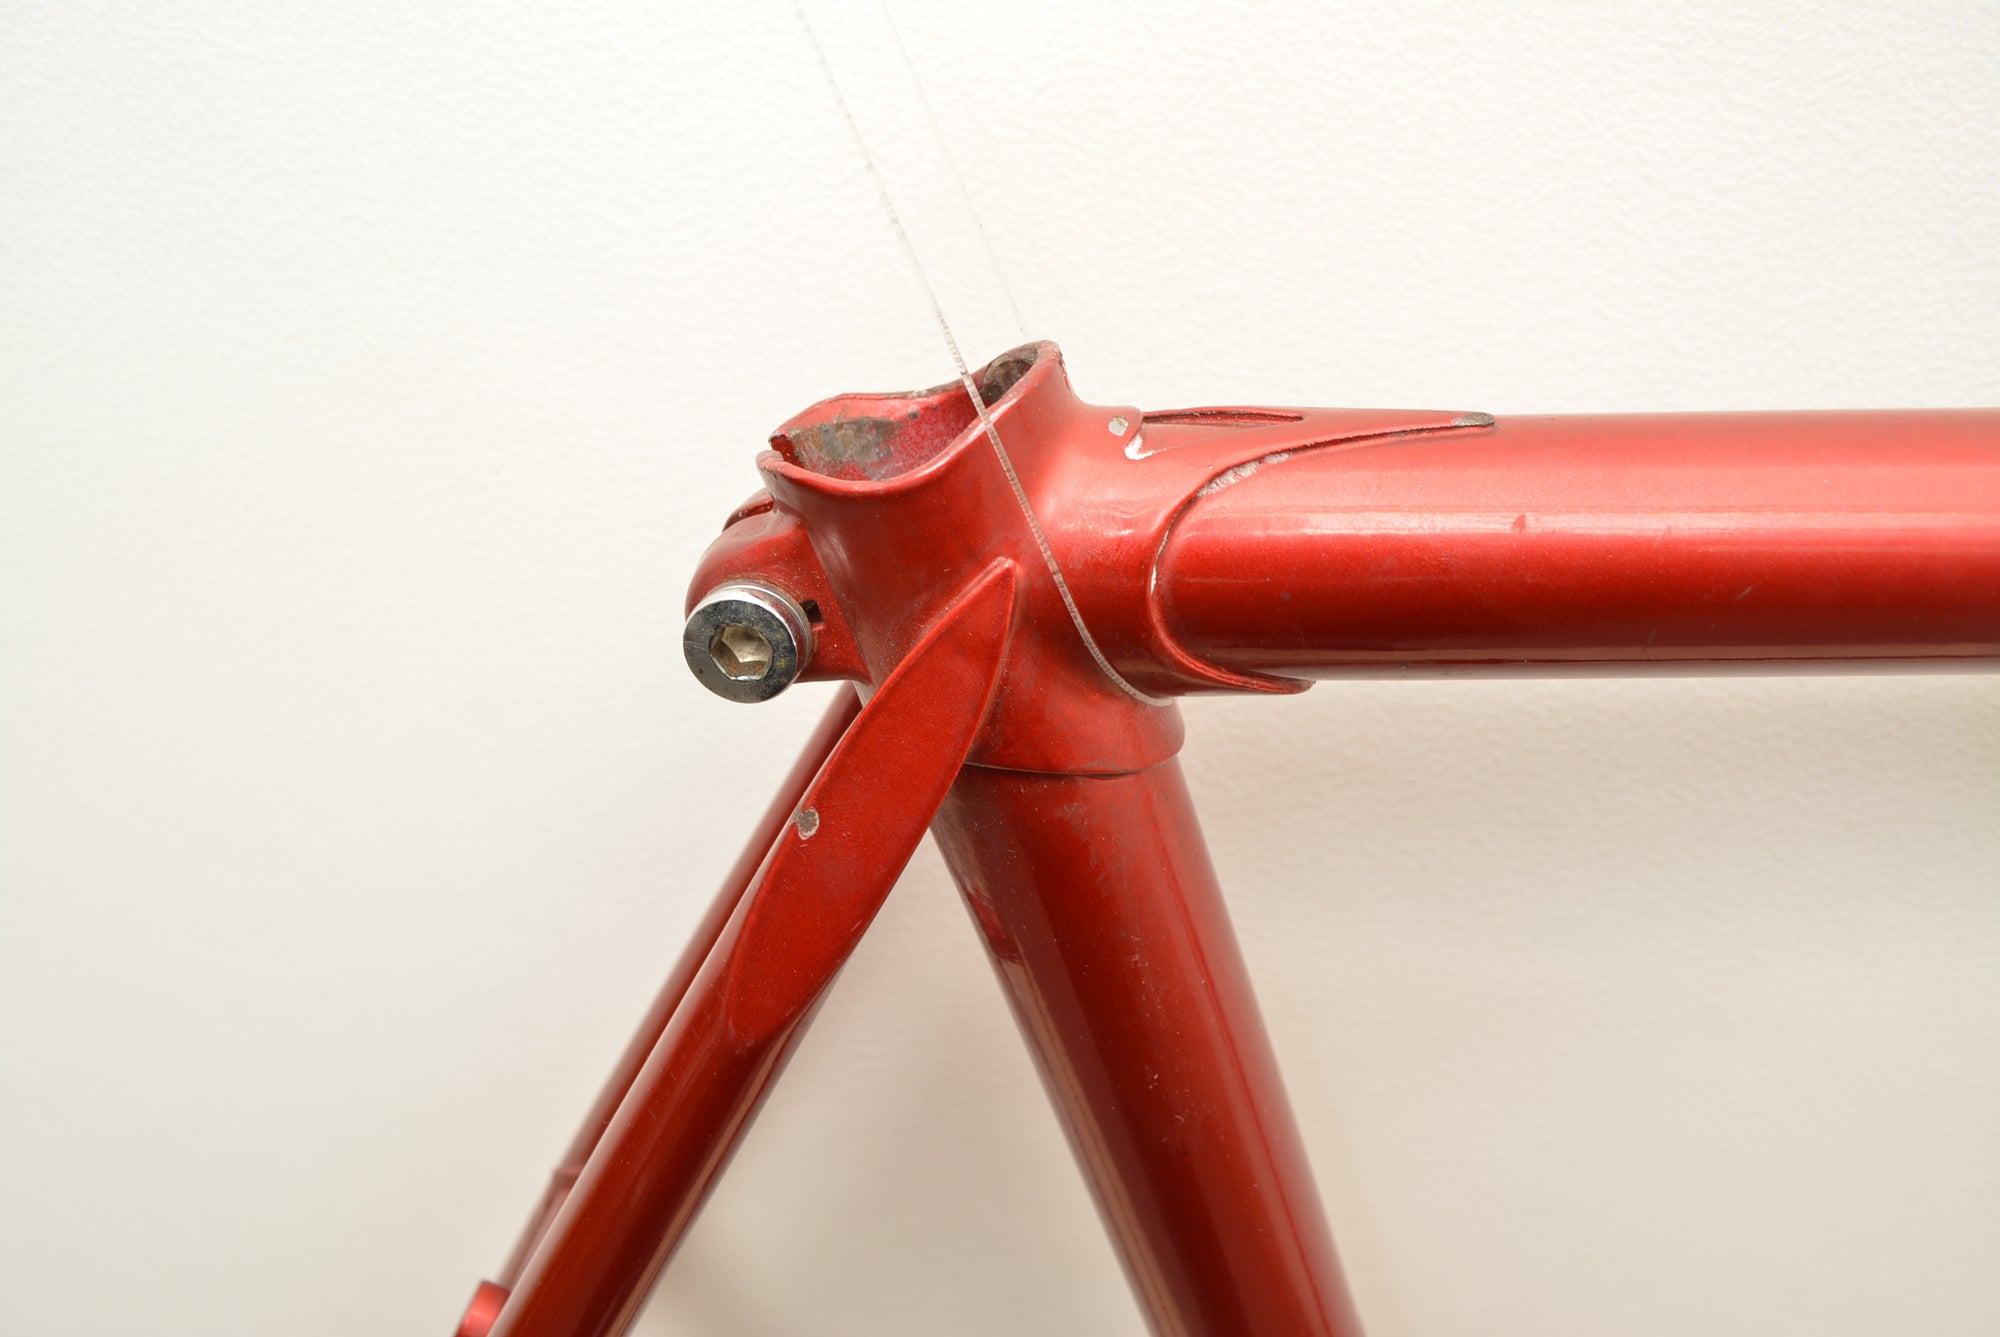 Cycles Gitane Rennradrahmen Reynolds 531 53cm